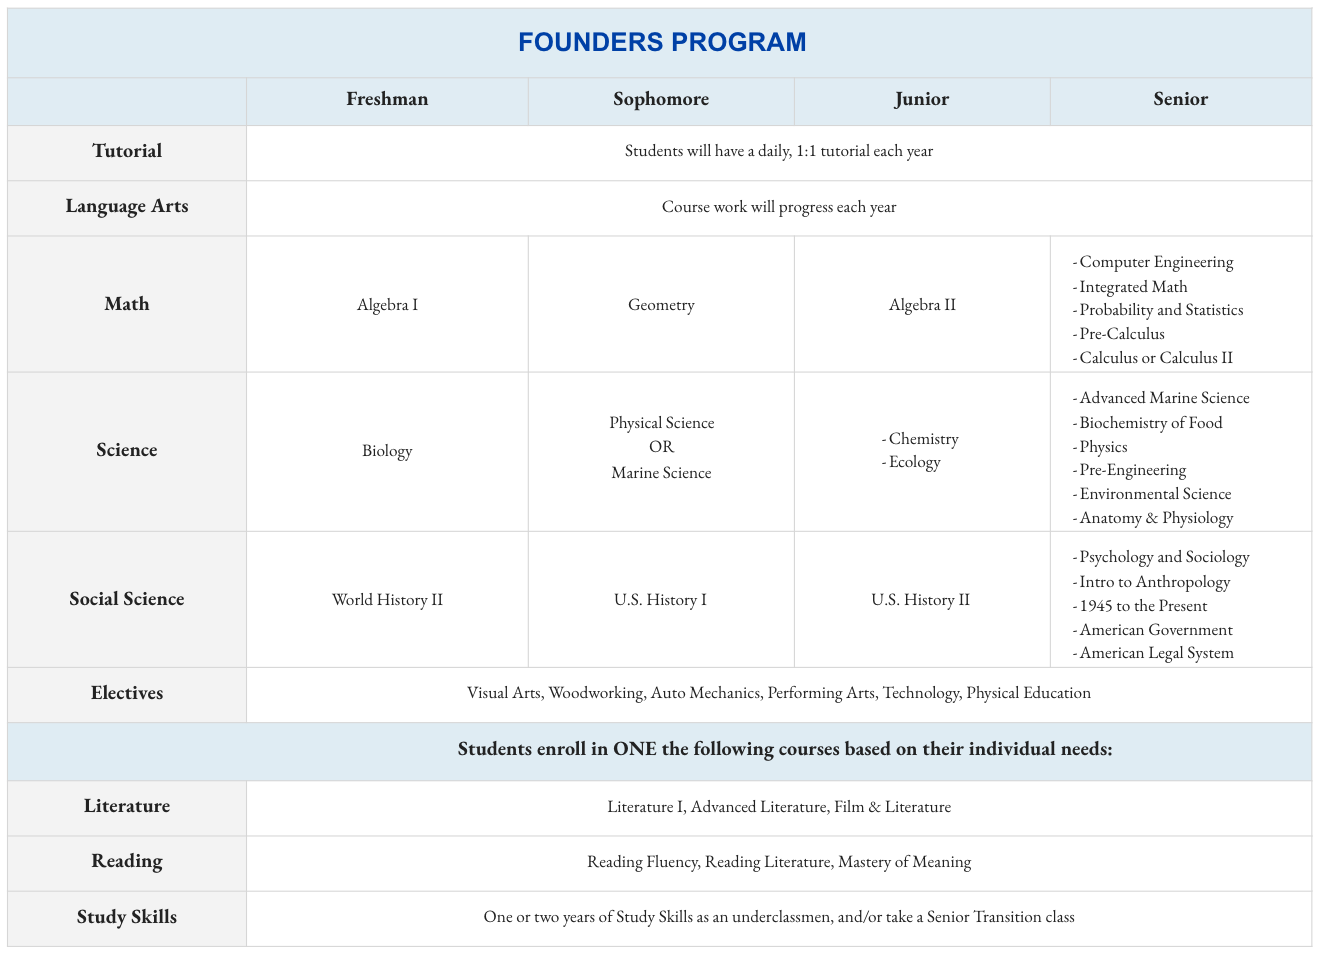 Founders Program Grid